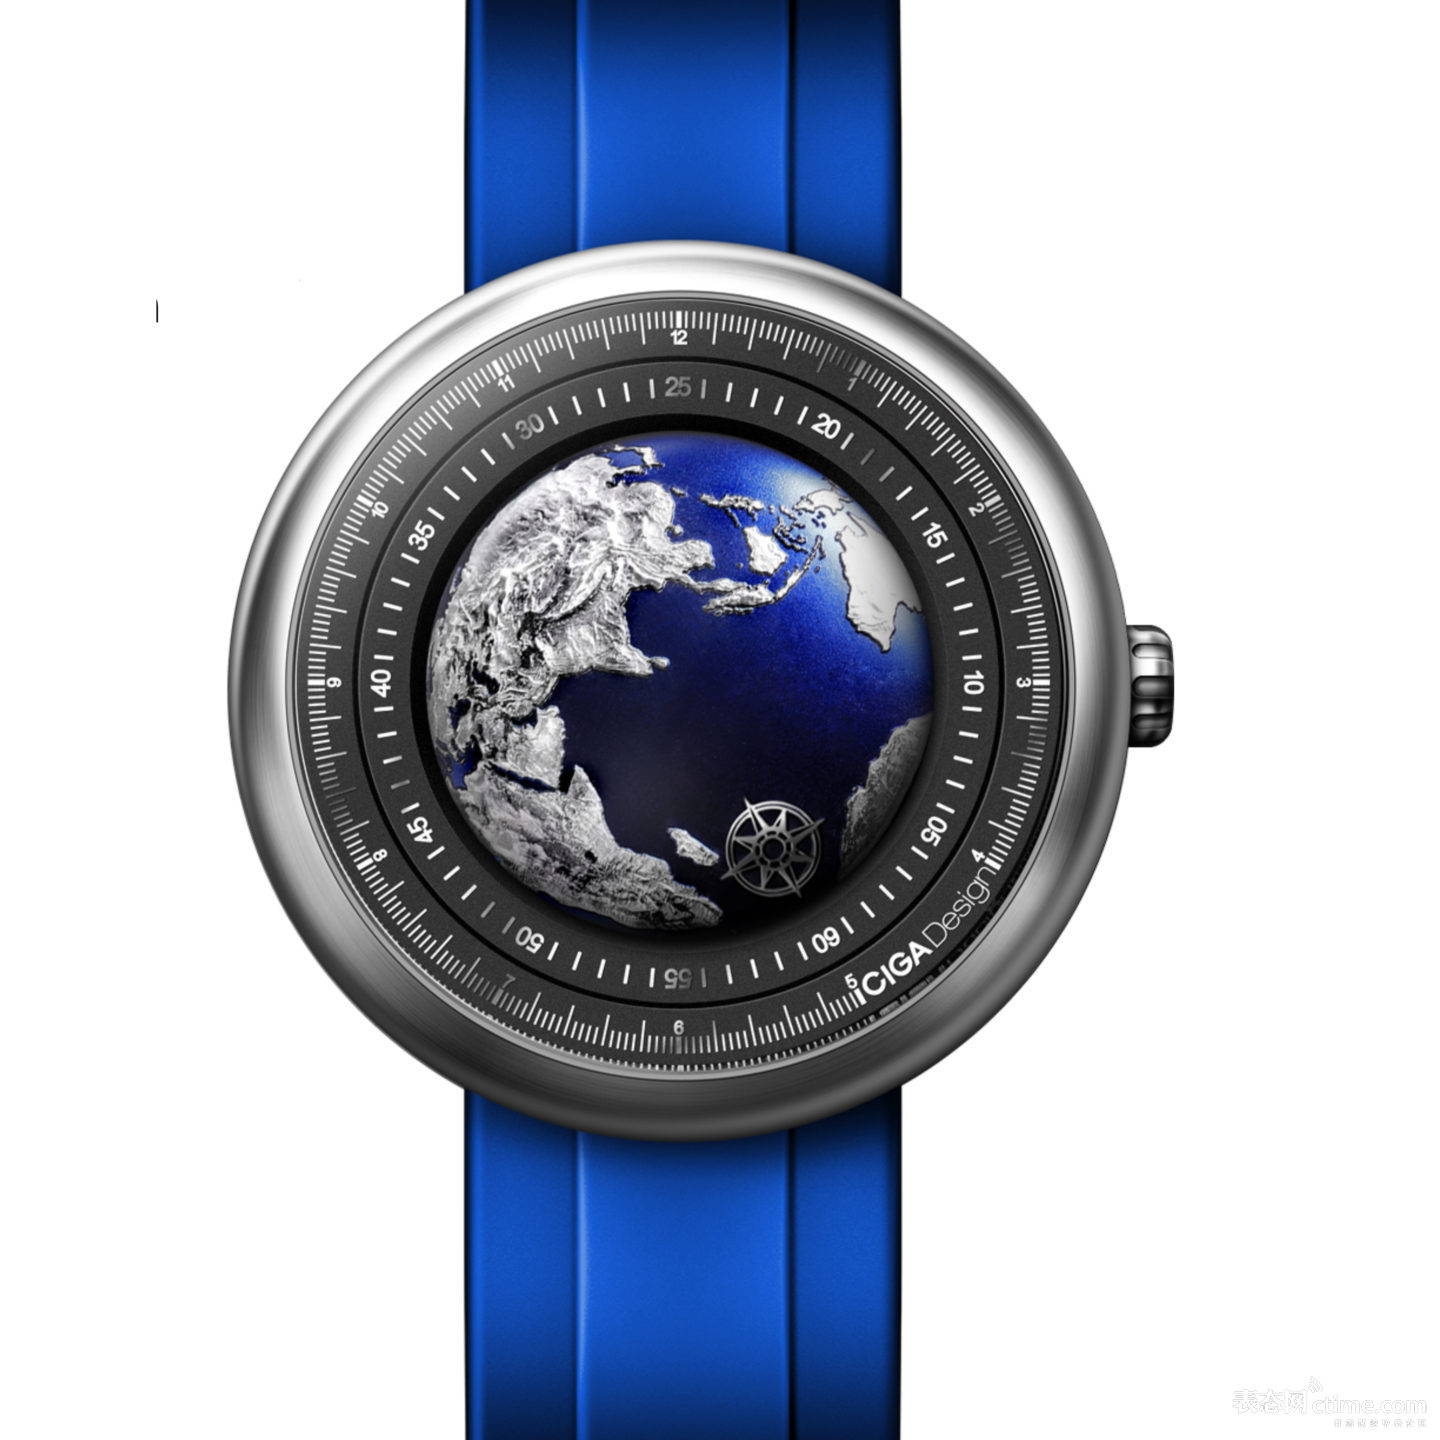 CIGA-Design-Blue-Planet-winning-watch-of-the-Challenge-watch-Prize-2021.jpeg